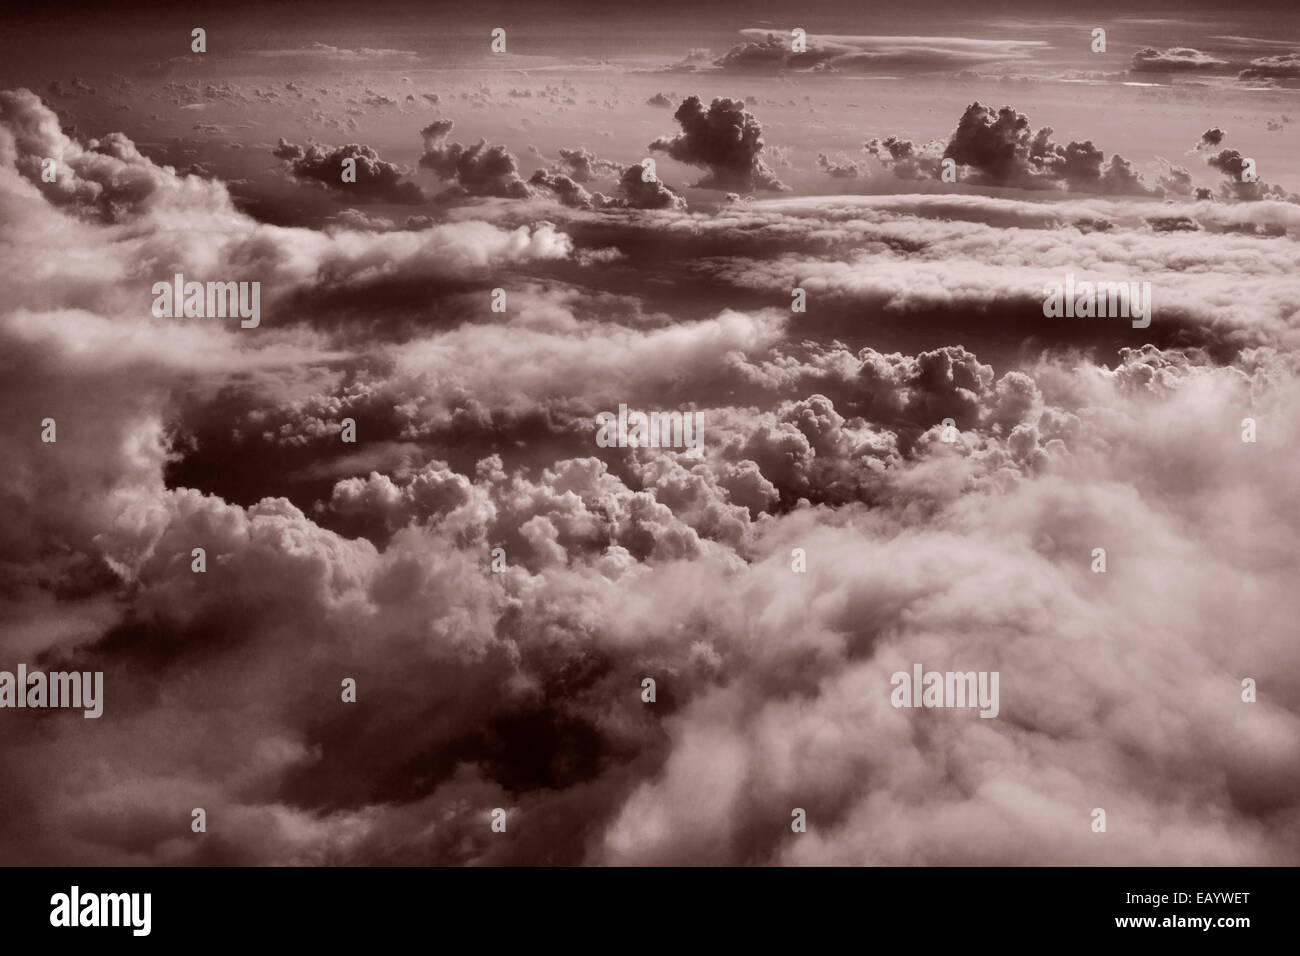 High altitude clouds, cumulus clouds, in Sepia toned, dramatic photograph. Stock Photo